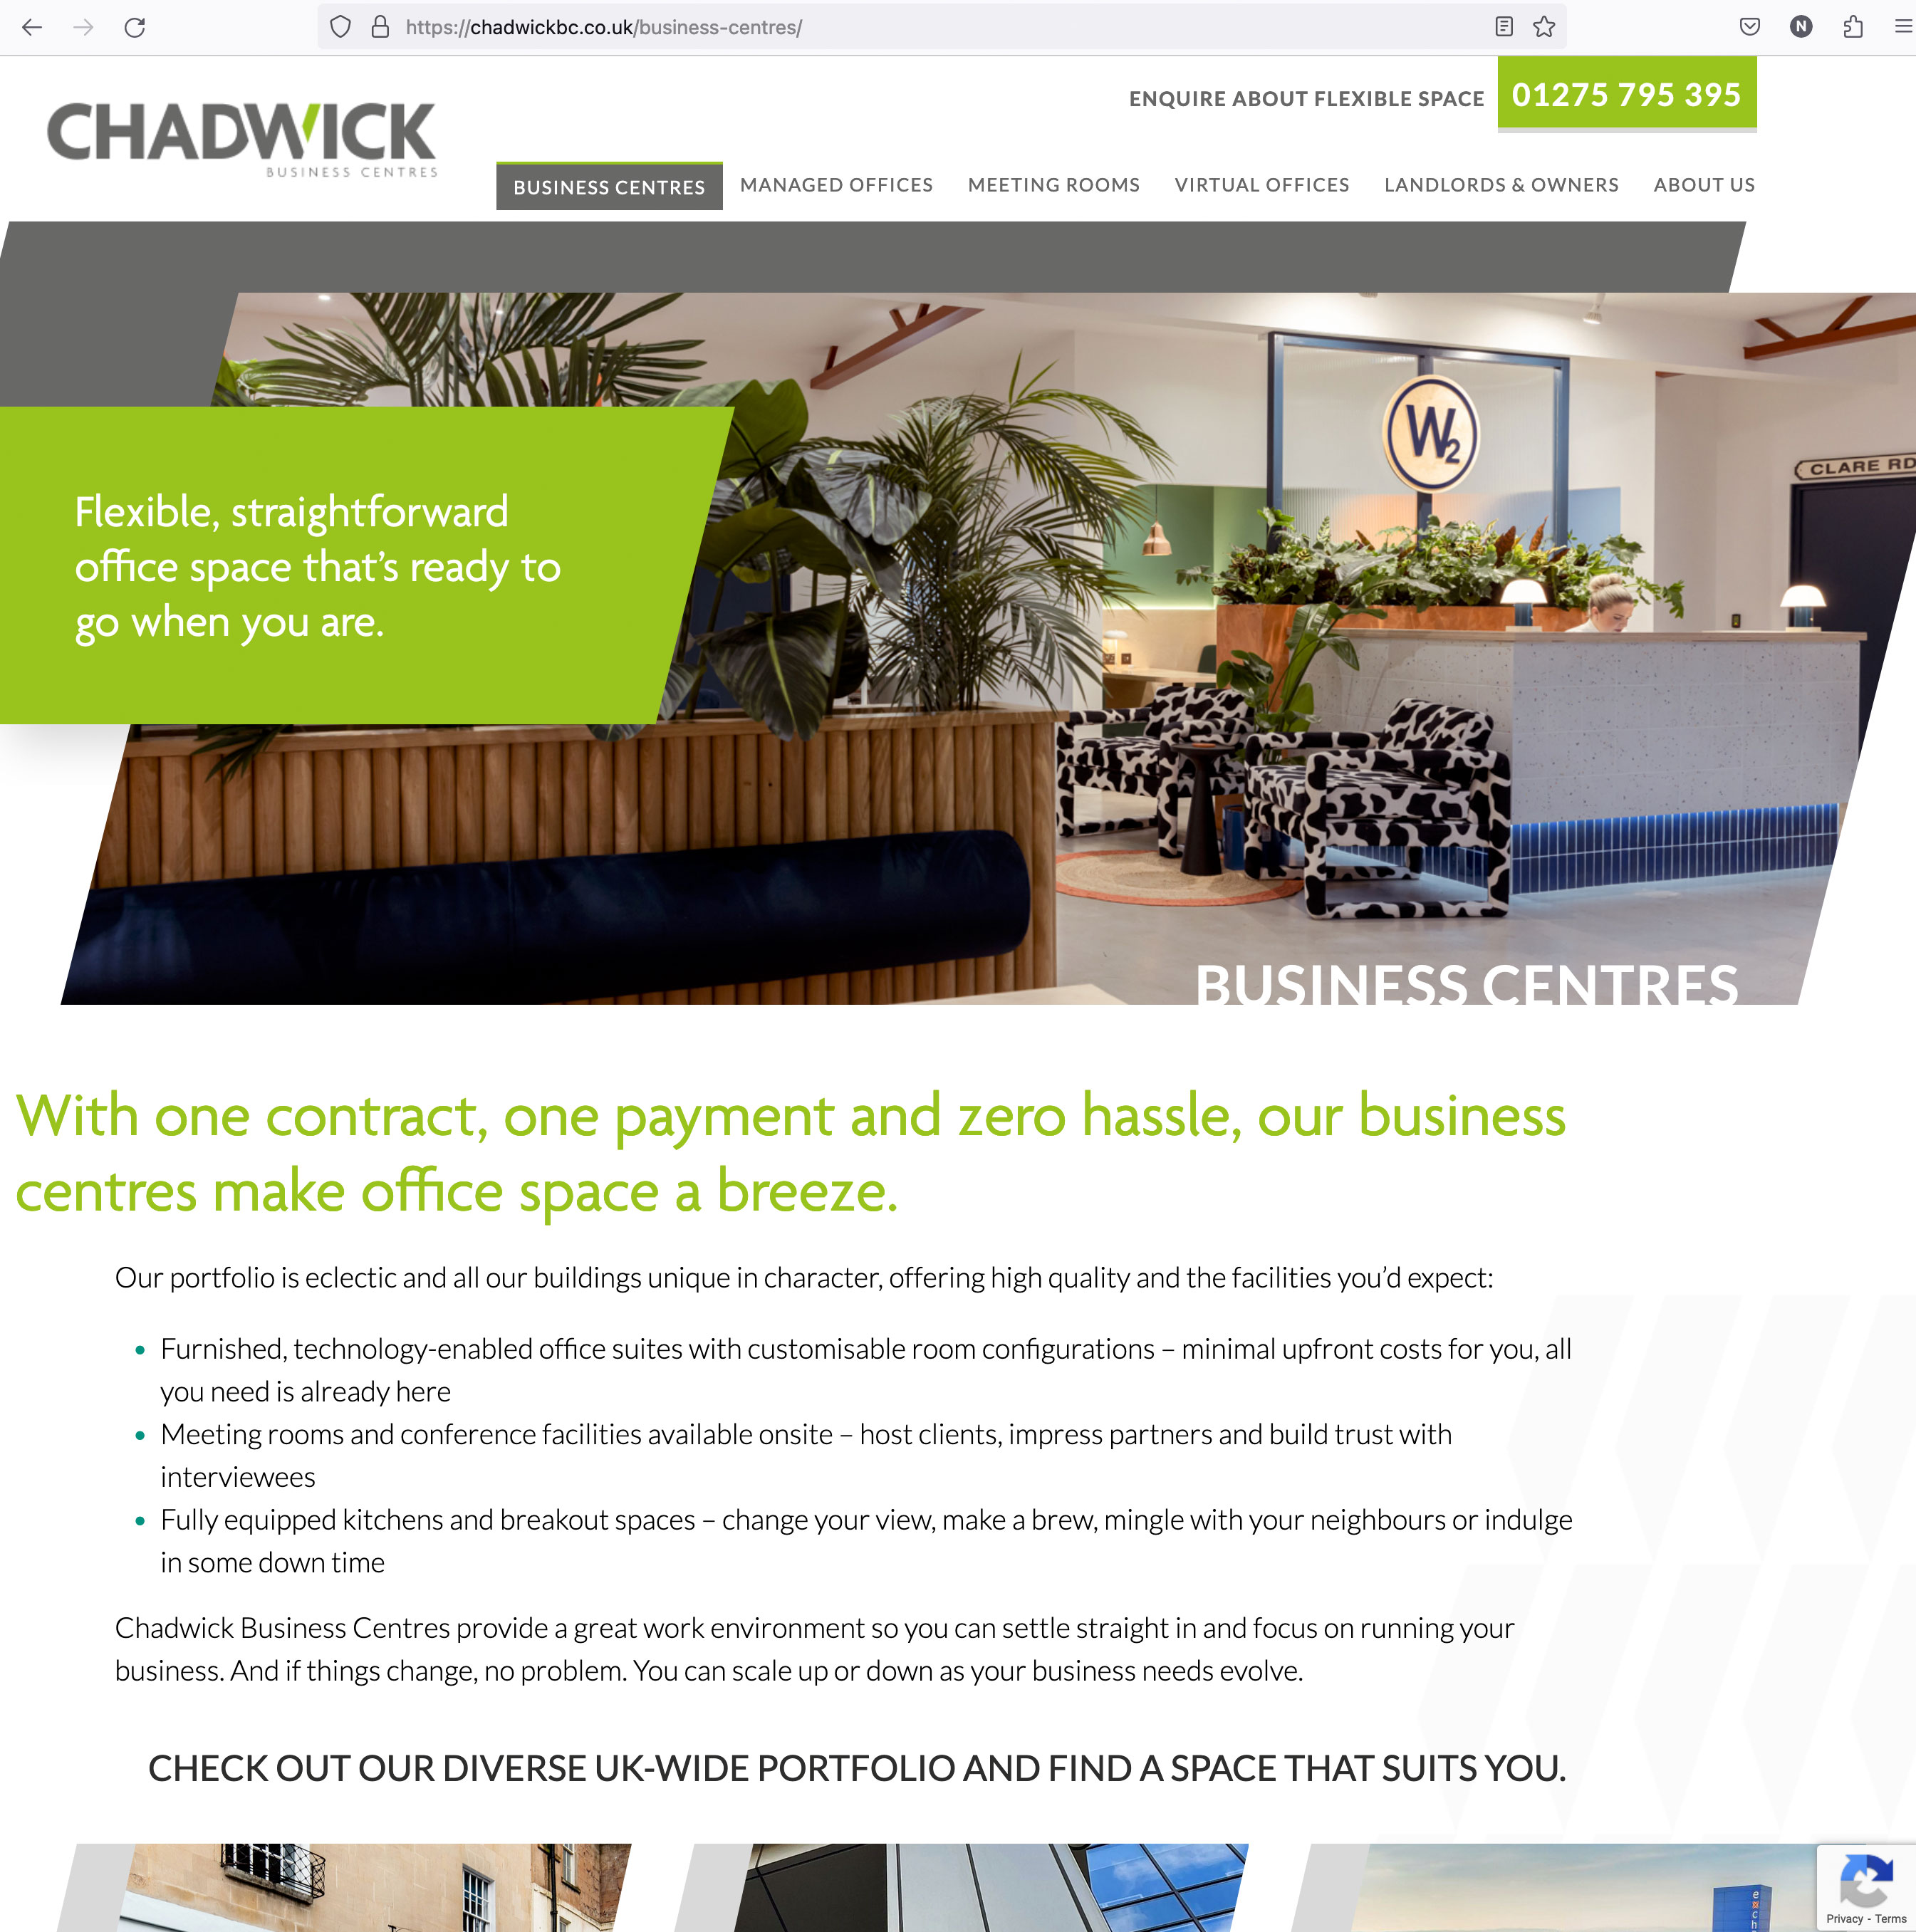 Chadwickbc-5.jpg